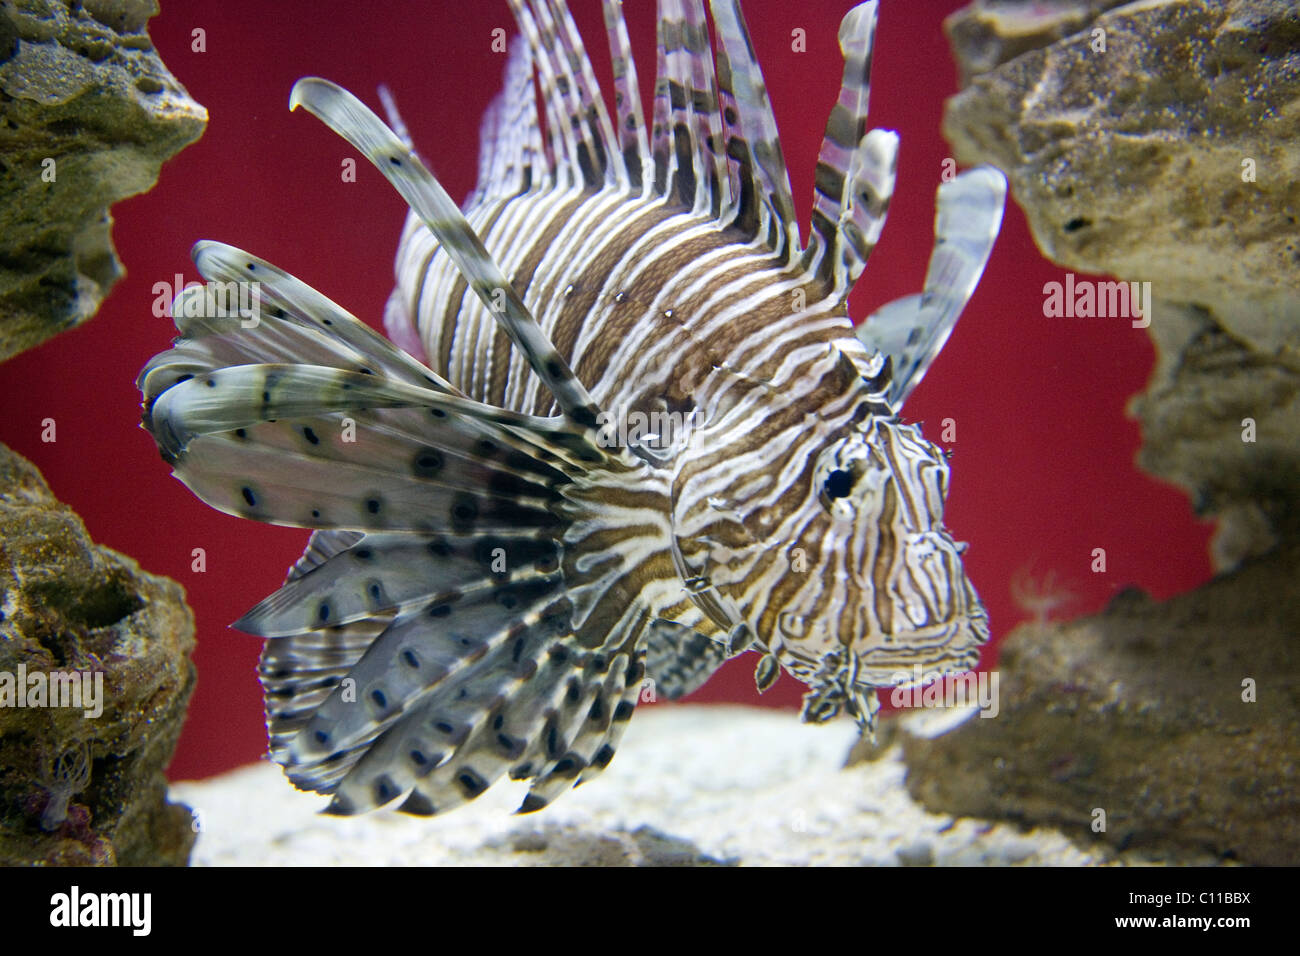 Teufel Firefish in Kapstadt Aquarium Stockfoto